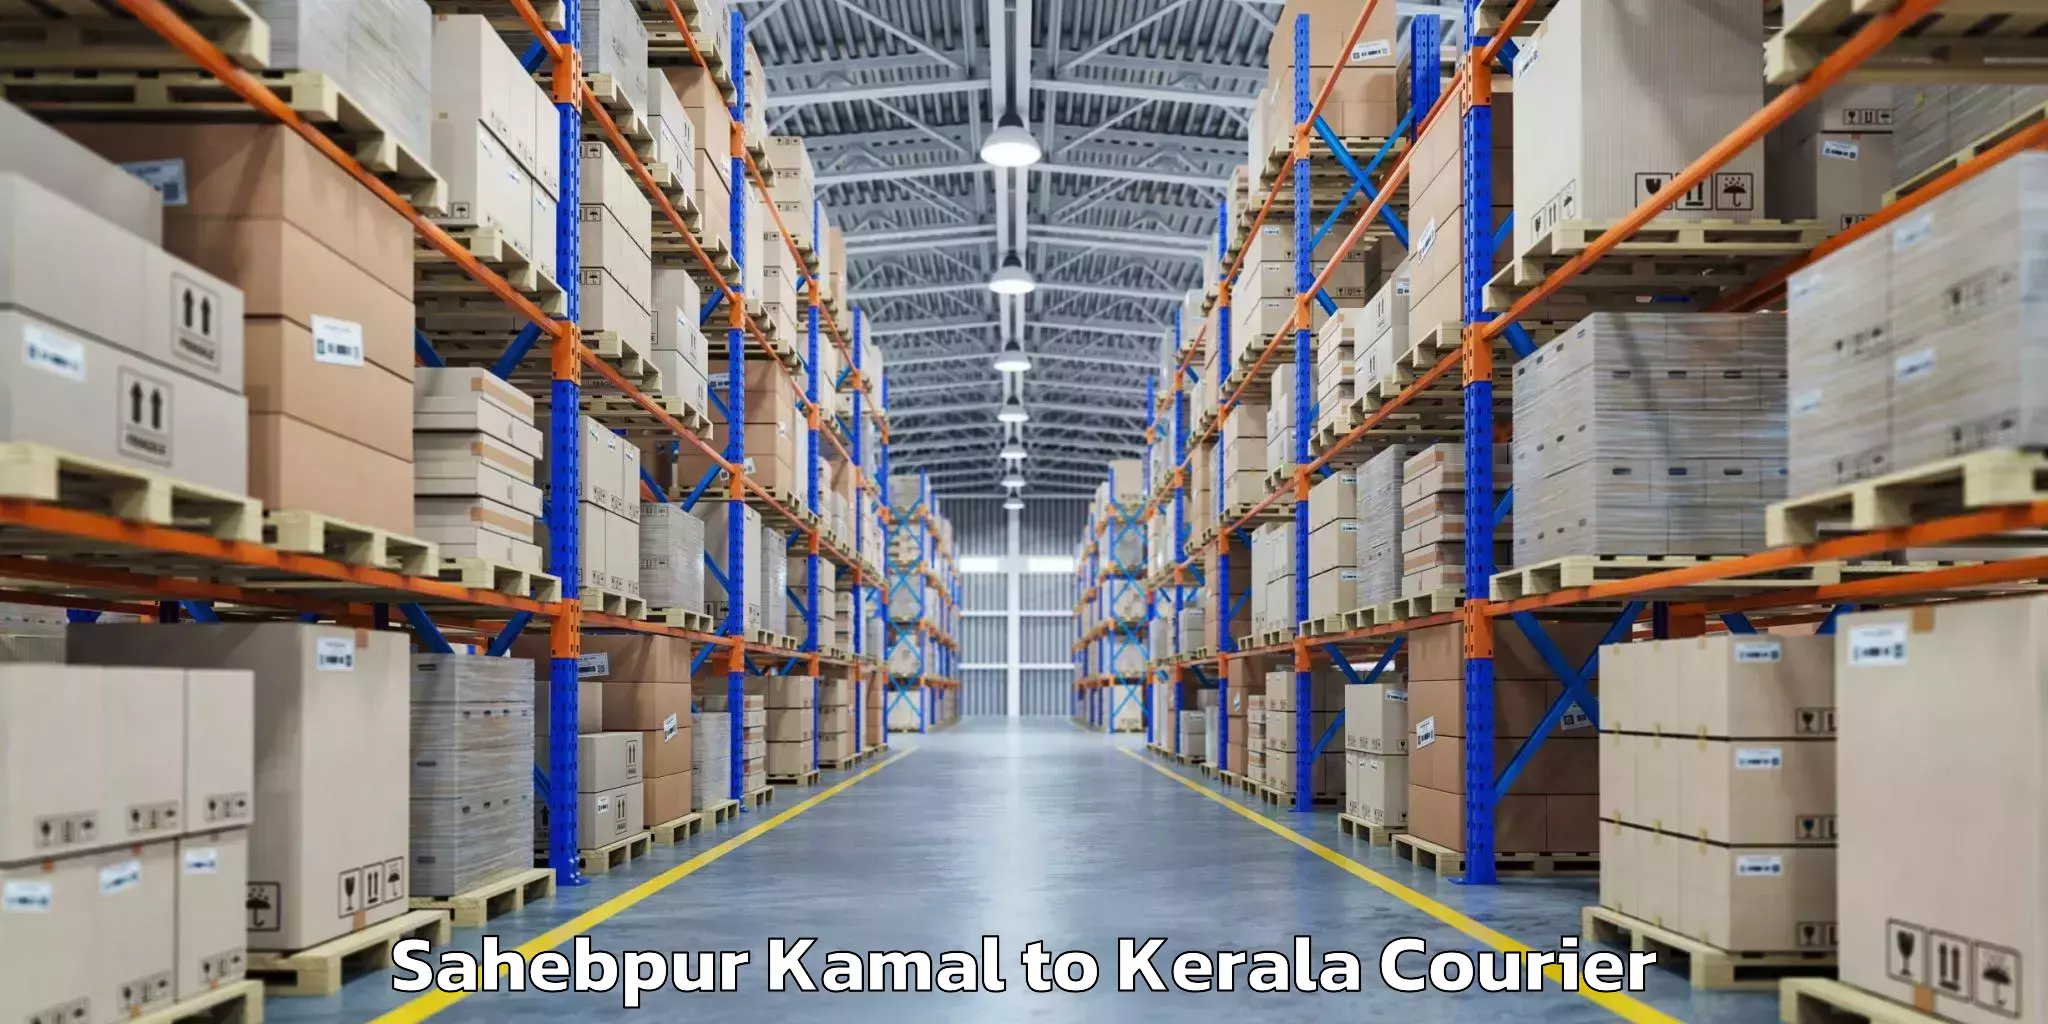 Same day luggage service Sahebpur Kamal to Kerala